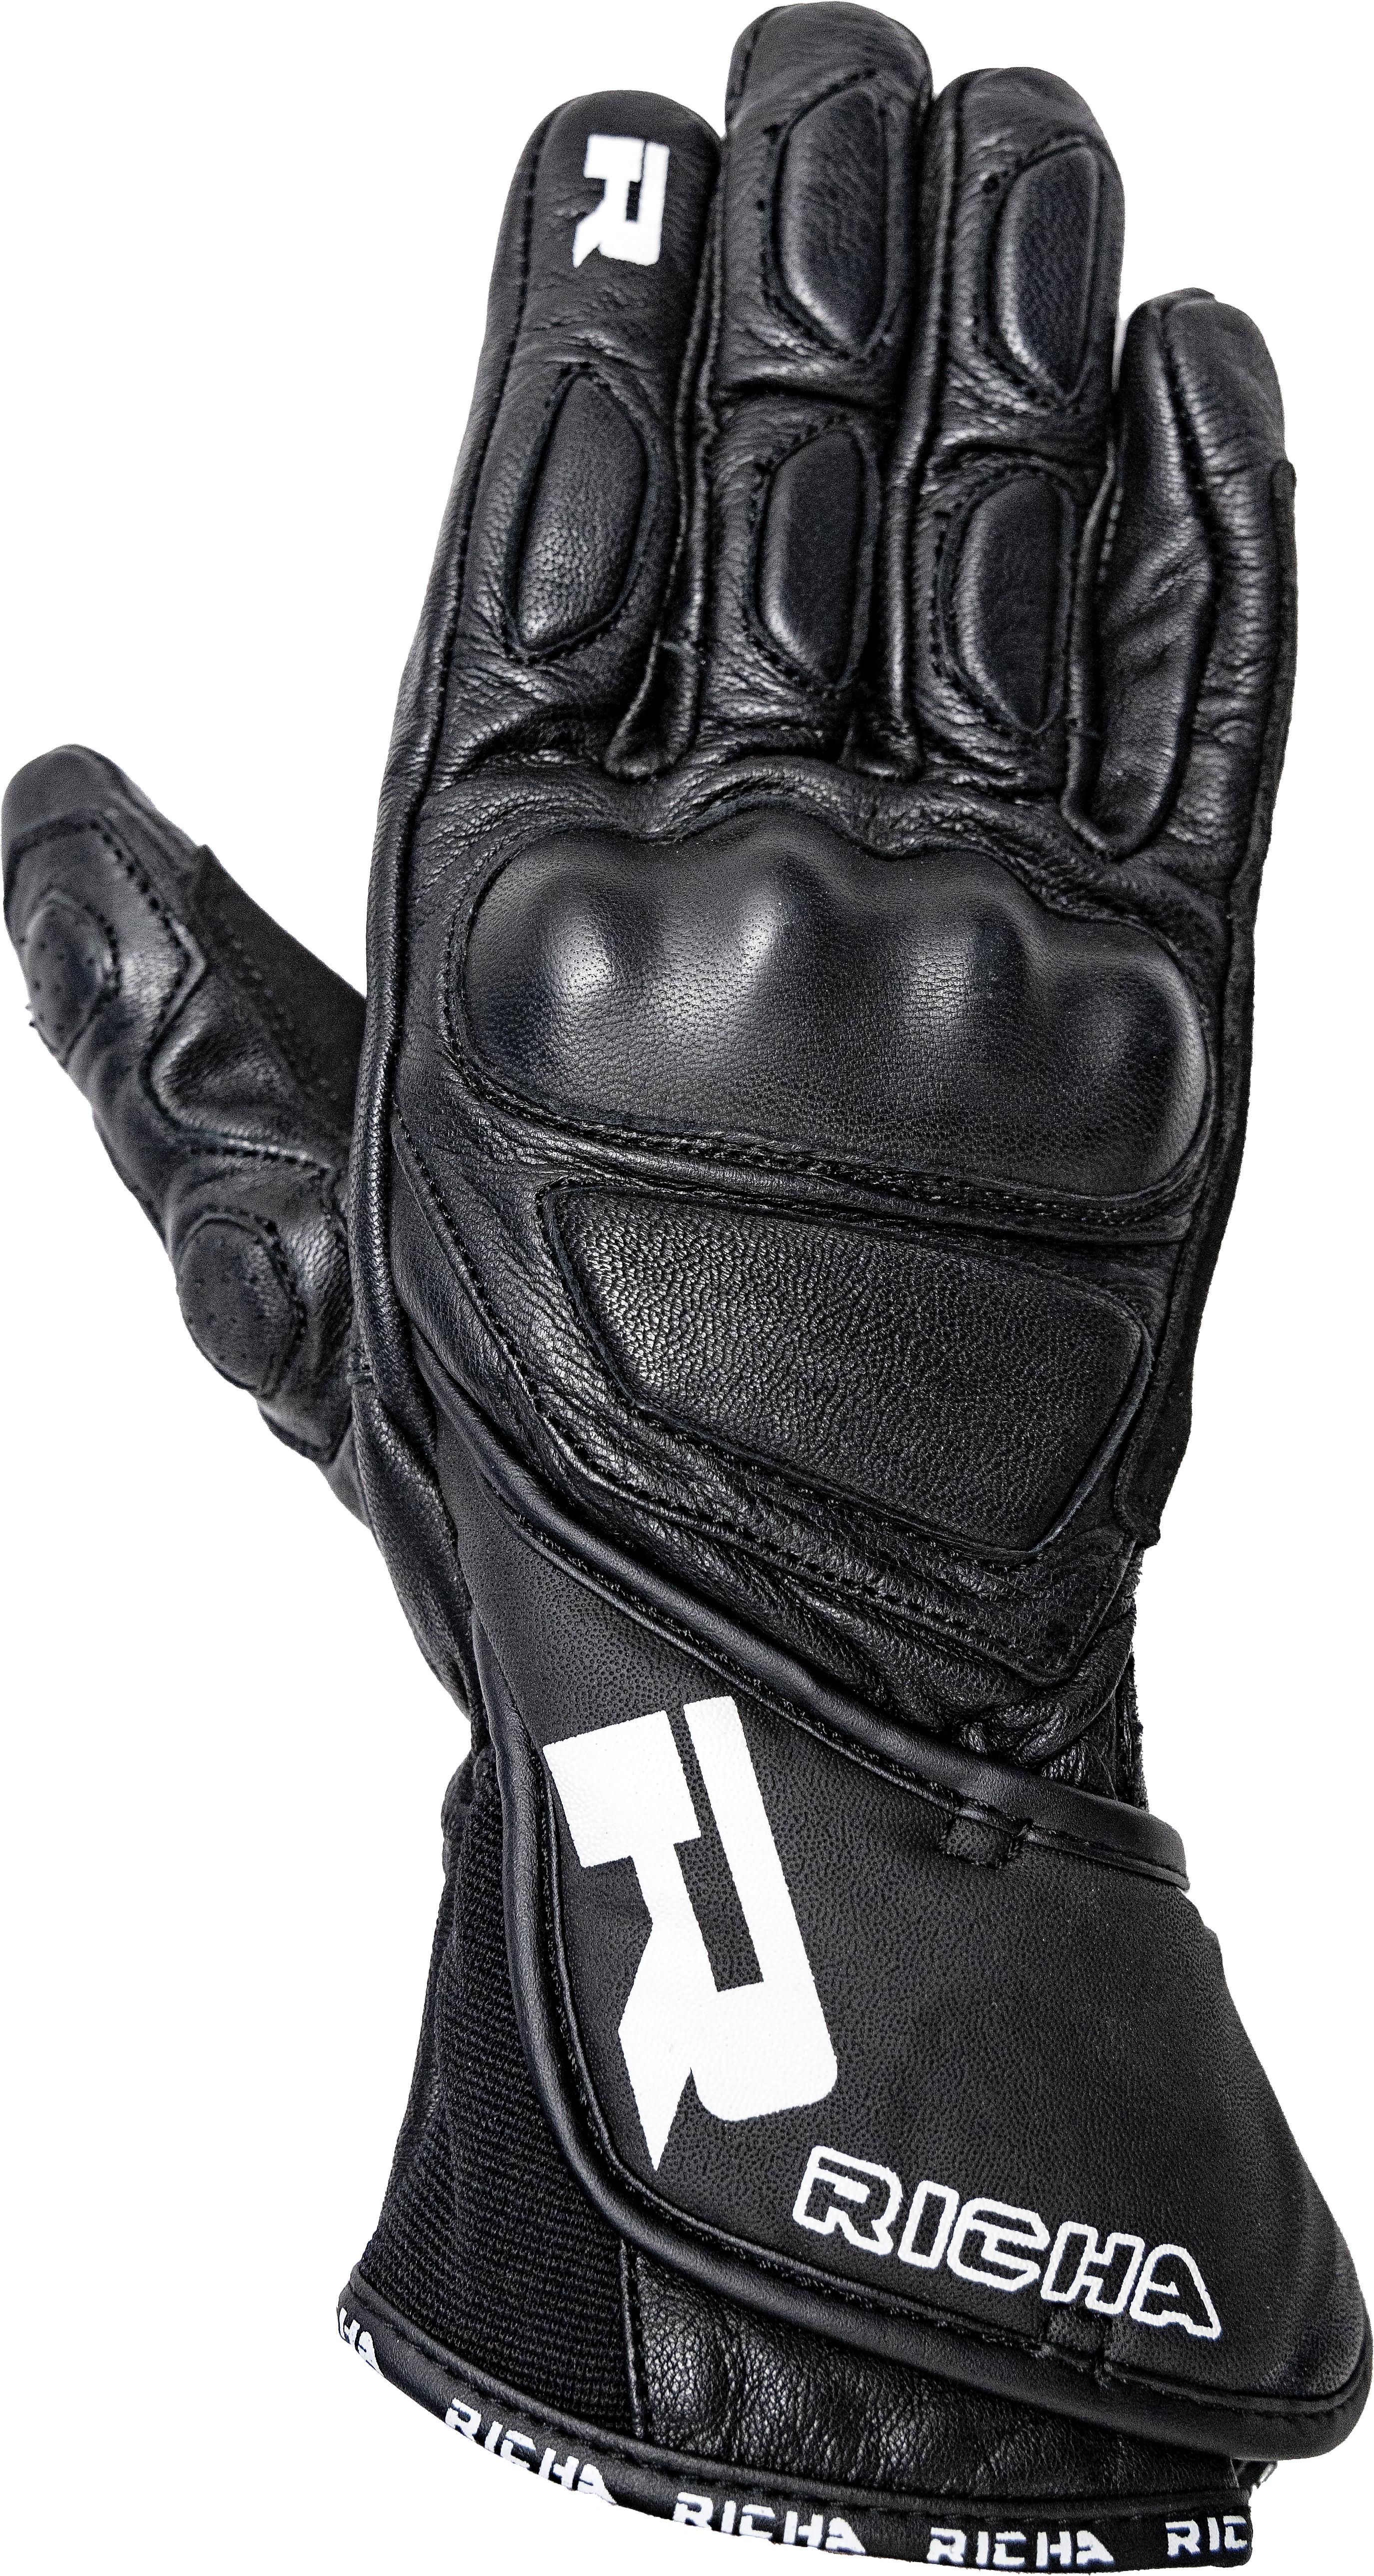 Richa Wss Motorcycle Gloves - Black, Medium